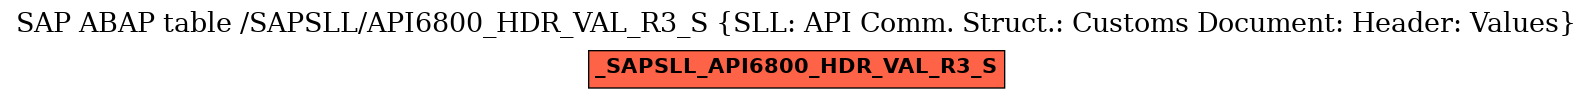 E-R Diagram for table /SAPSLL/API6800_HDR_VAL_R3_S (SLL: API Comm. Struct.: Customs Document: Header: Values)